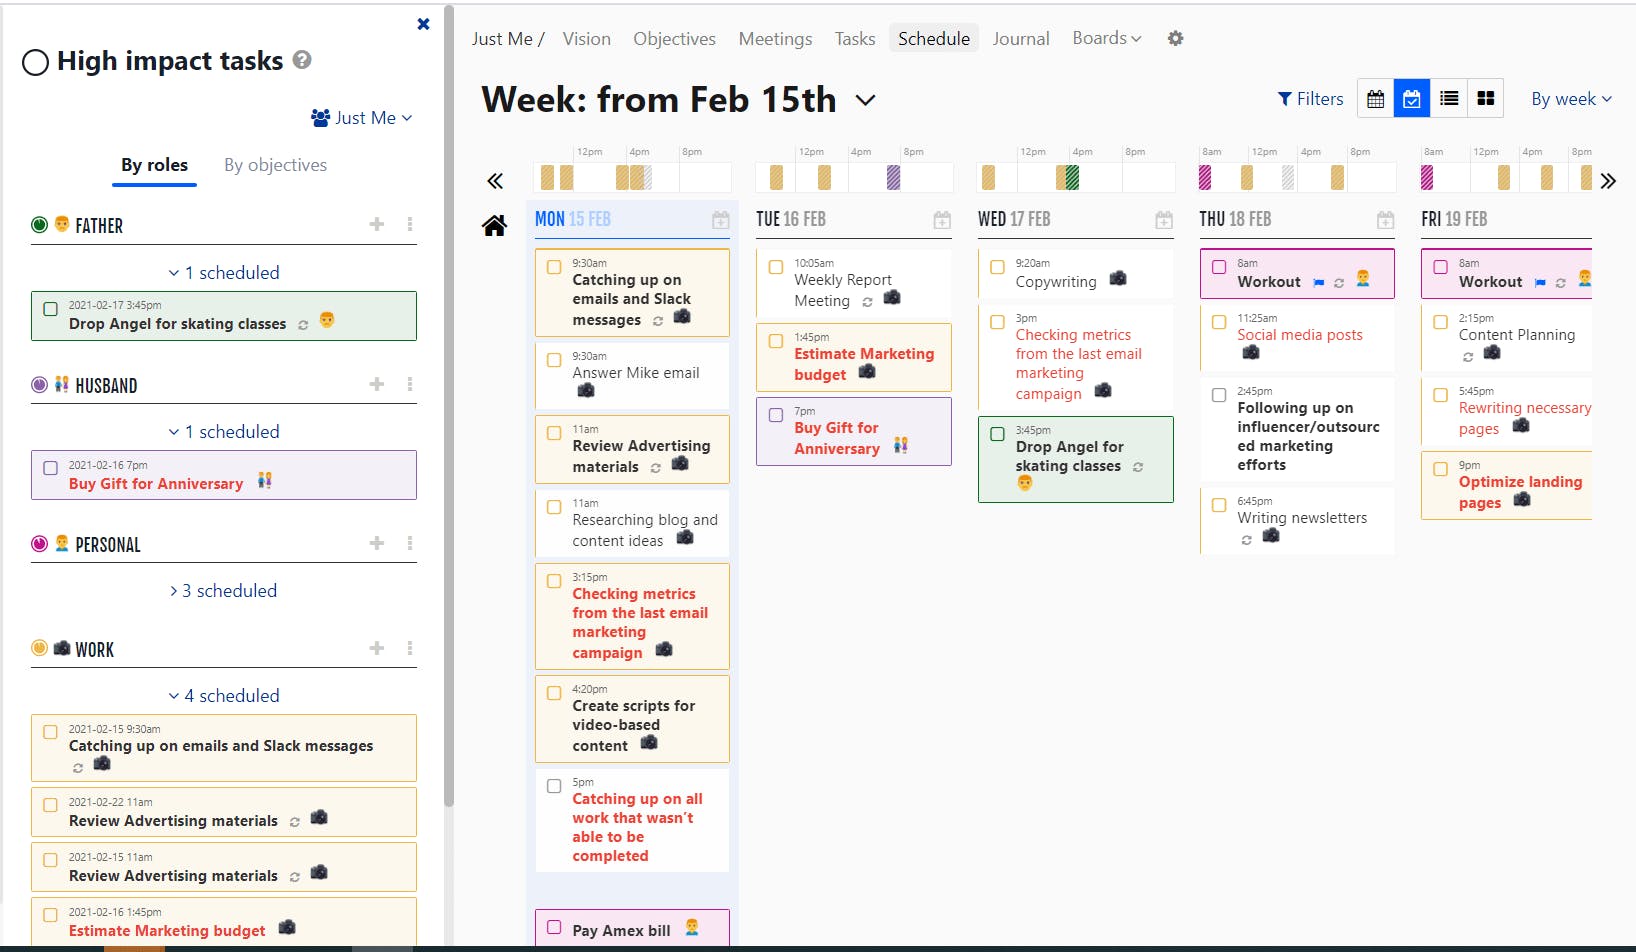 Free Planner Maker: Create Personal Schedule Online